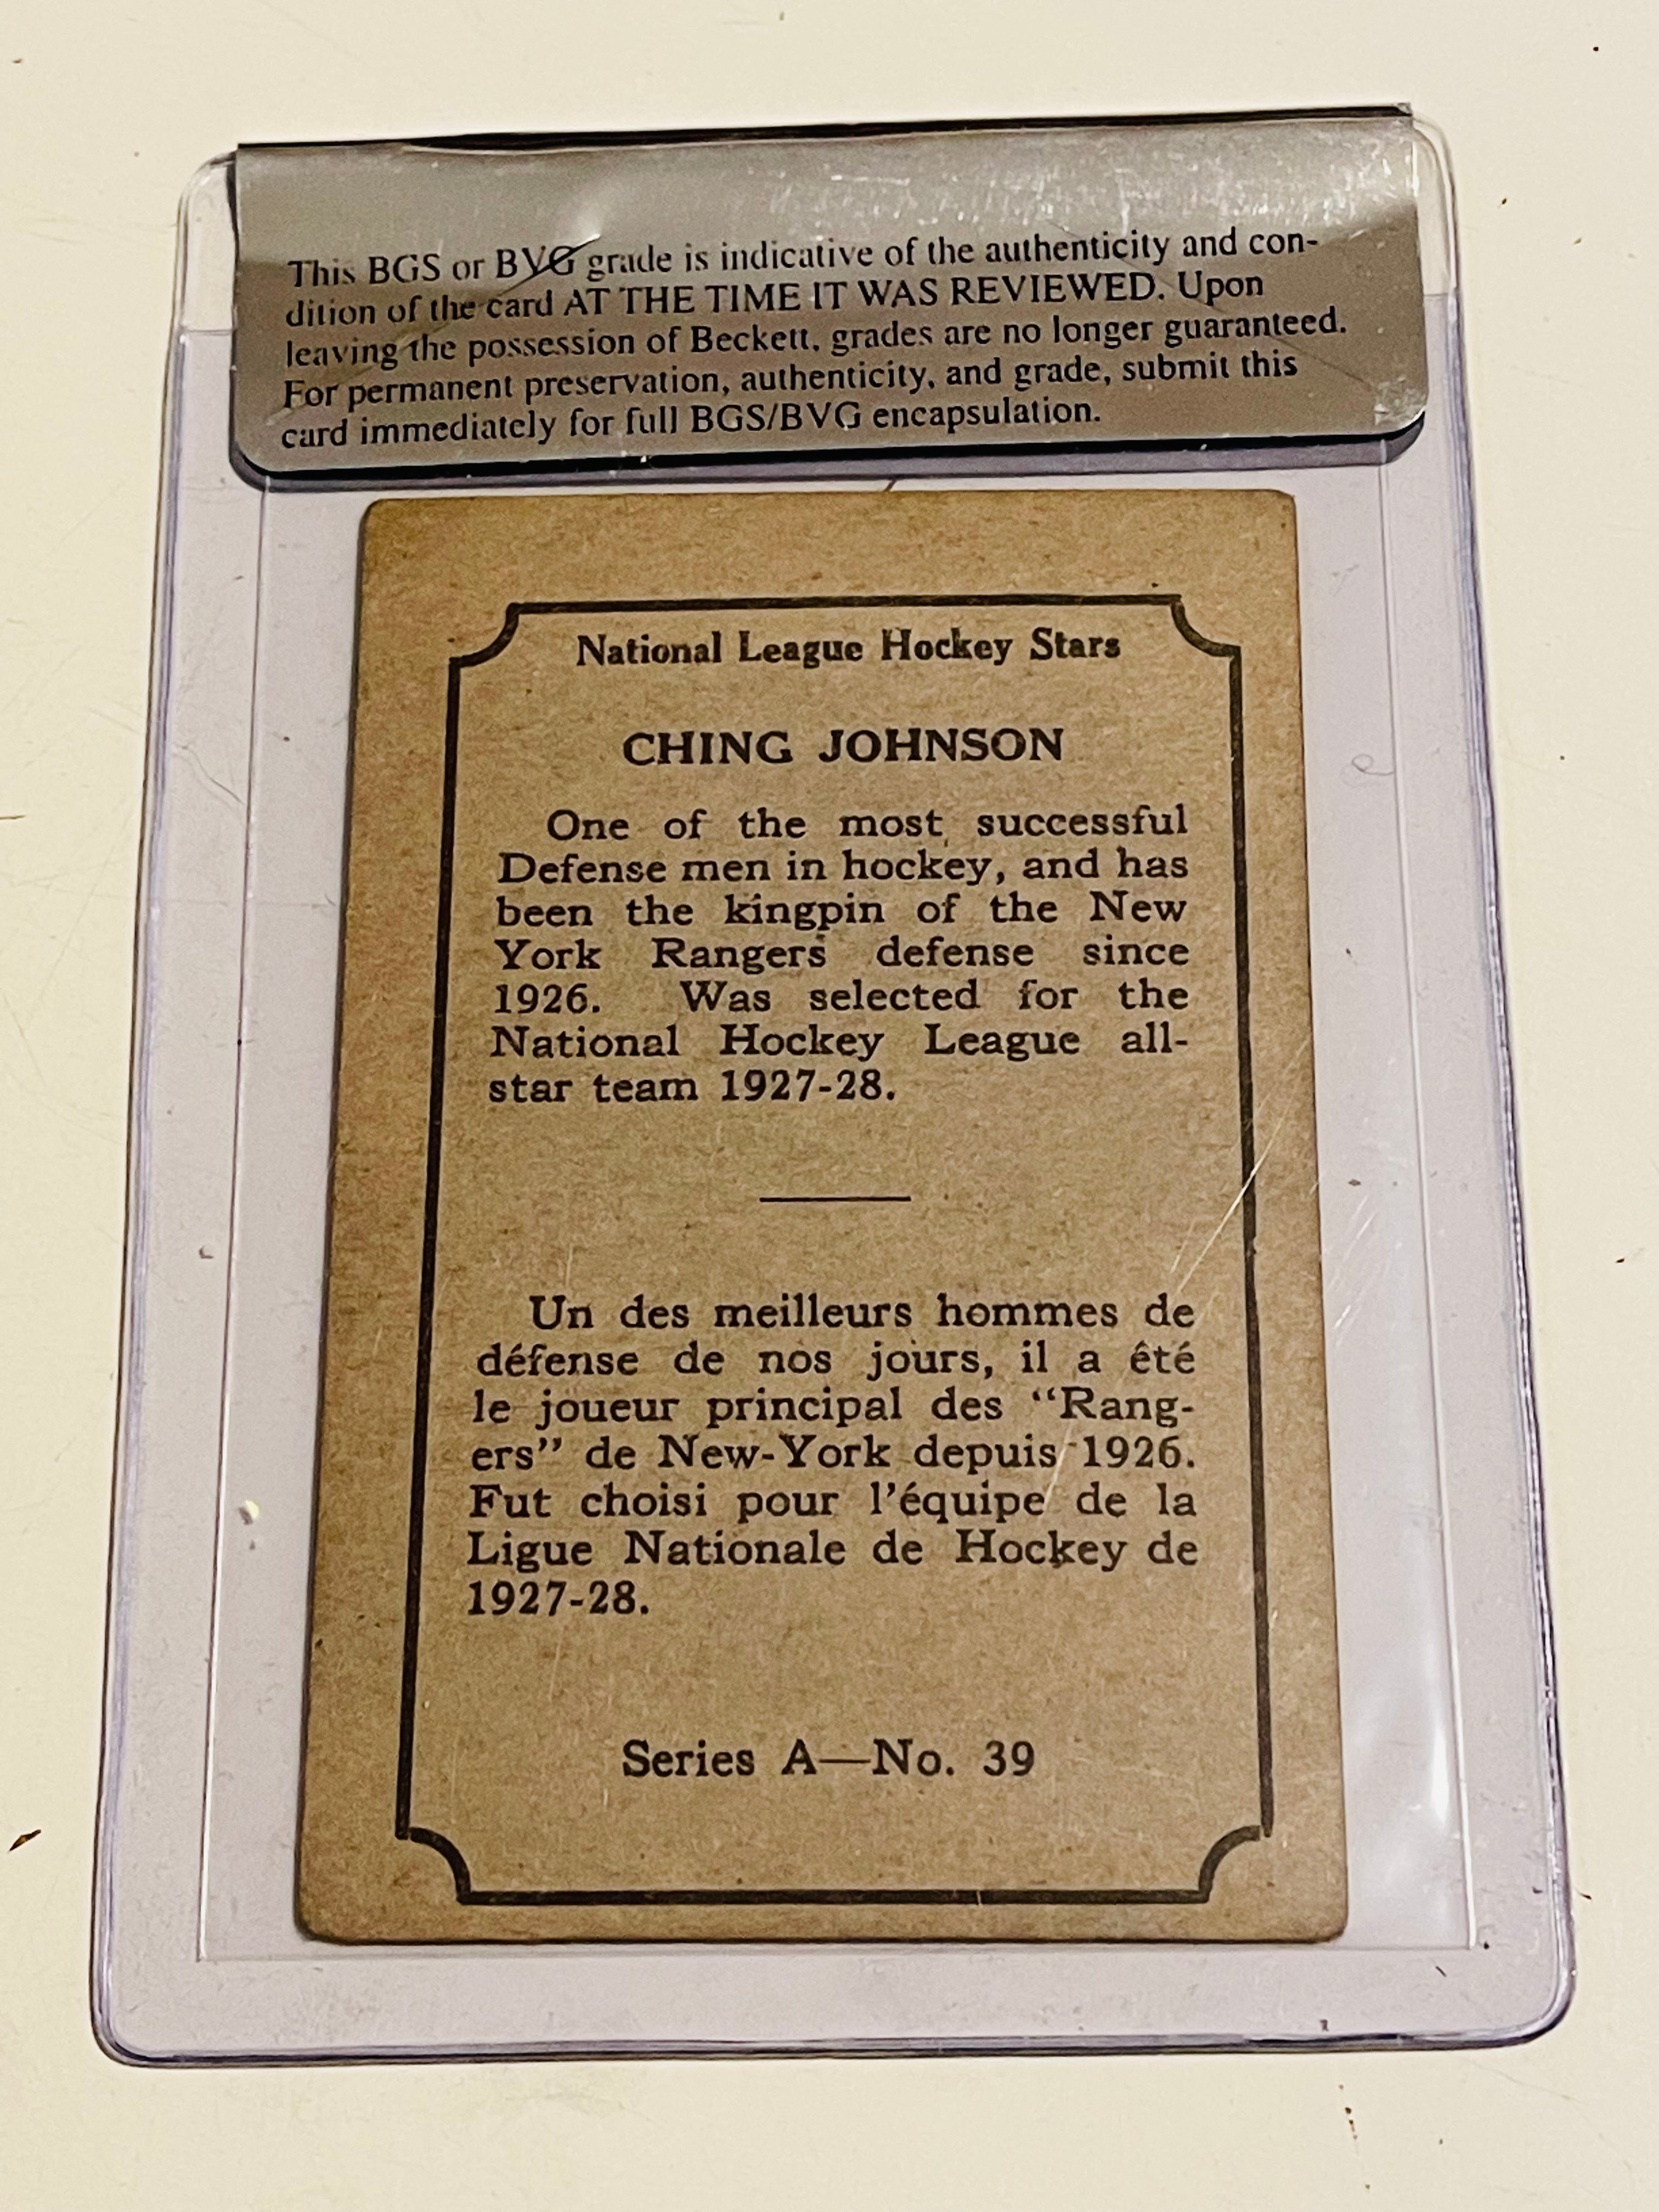 1933 O-pee-Chee Ching Johnson series A hockey card graded